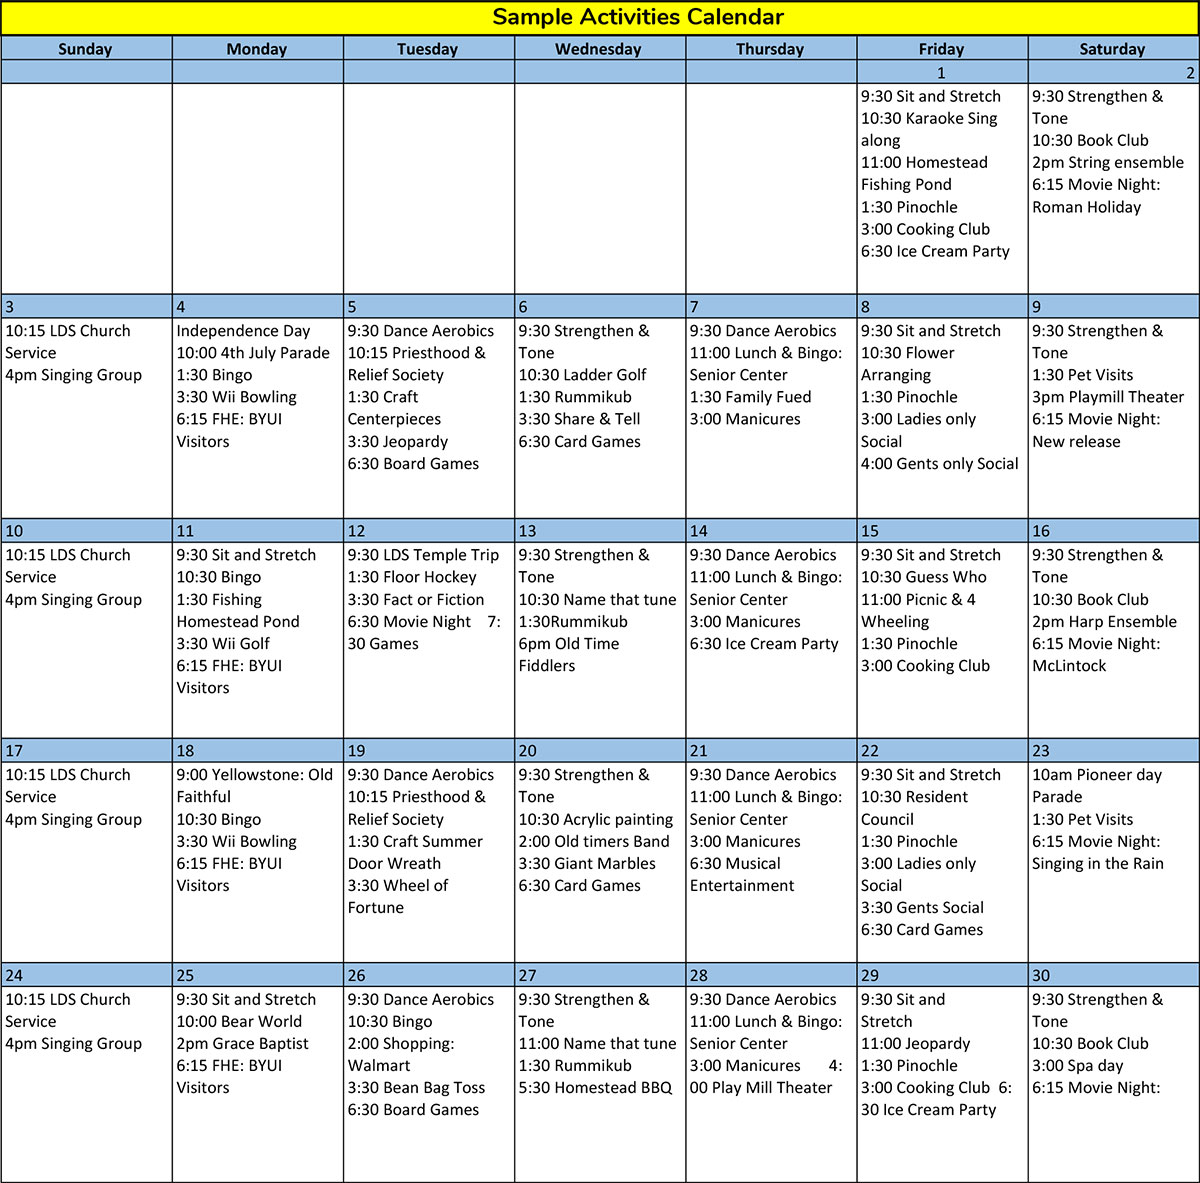 Example Activity Calendar